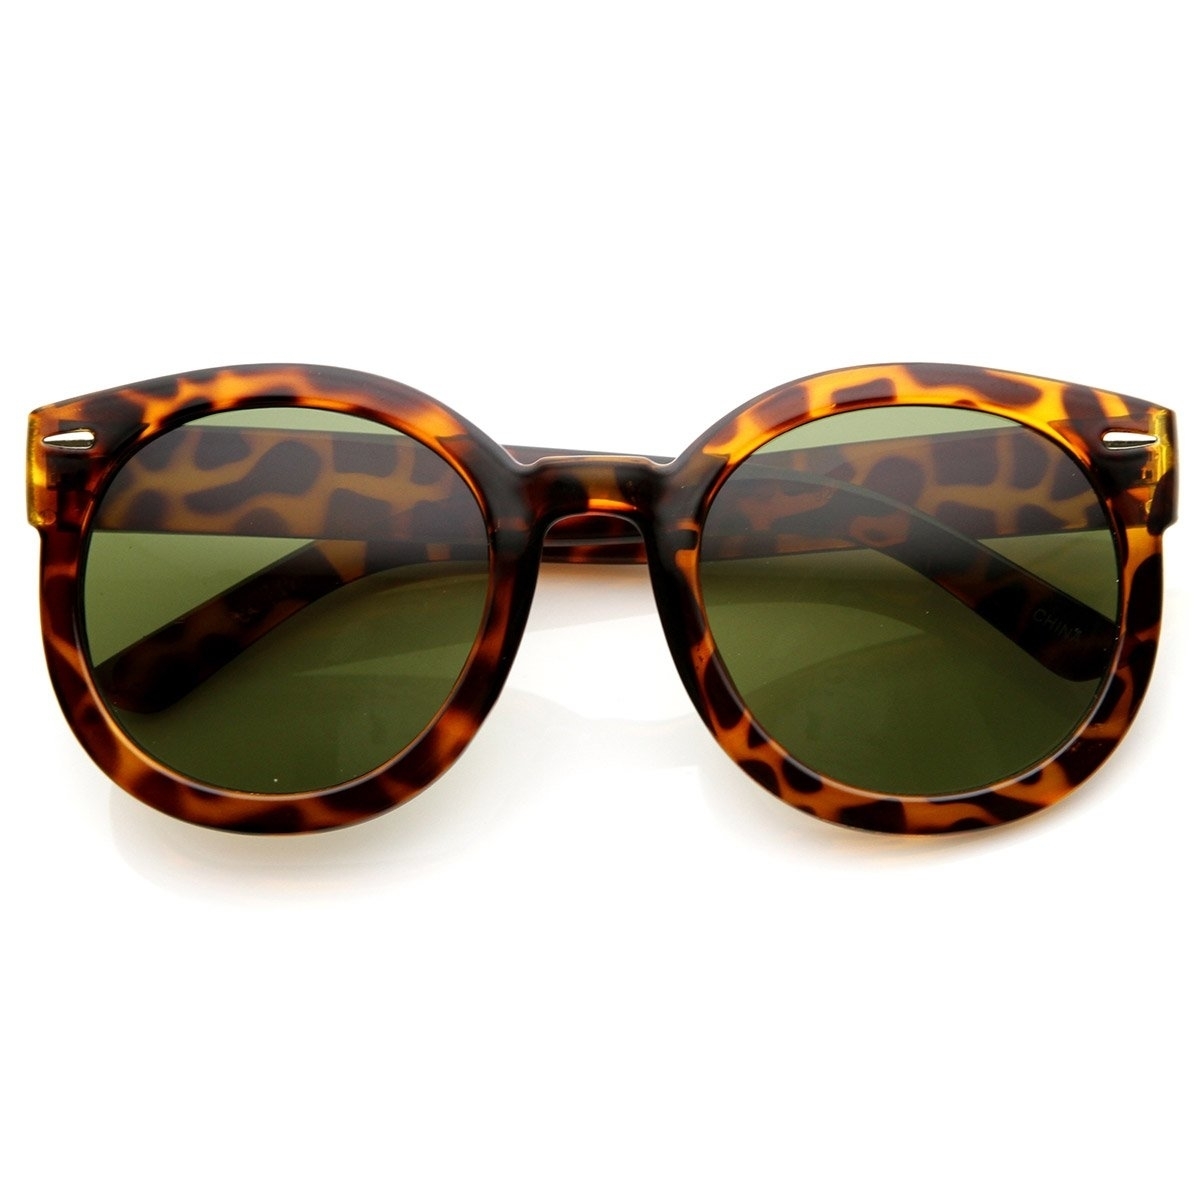 Womens Plastic Sunglasses Oversized Retro Style With Metal Rivets - Black Lavender